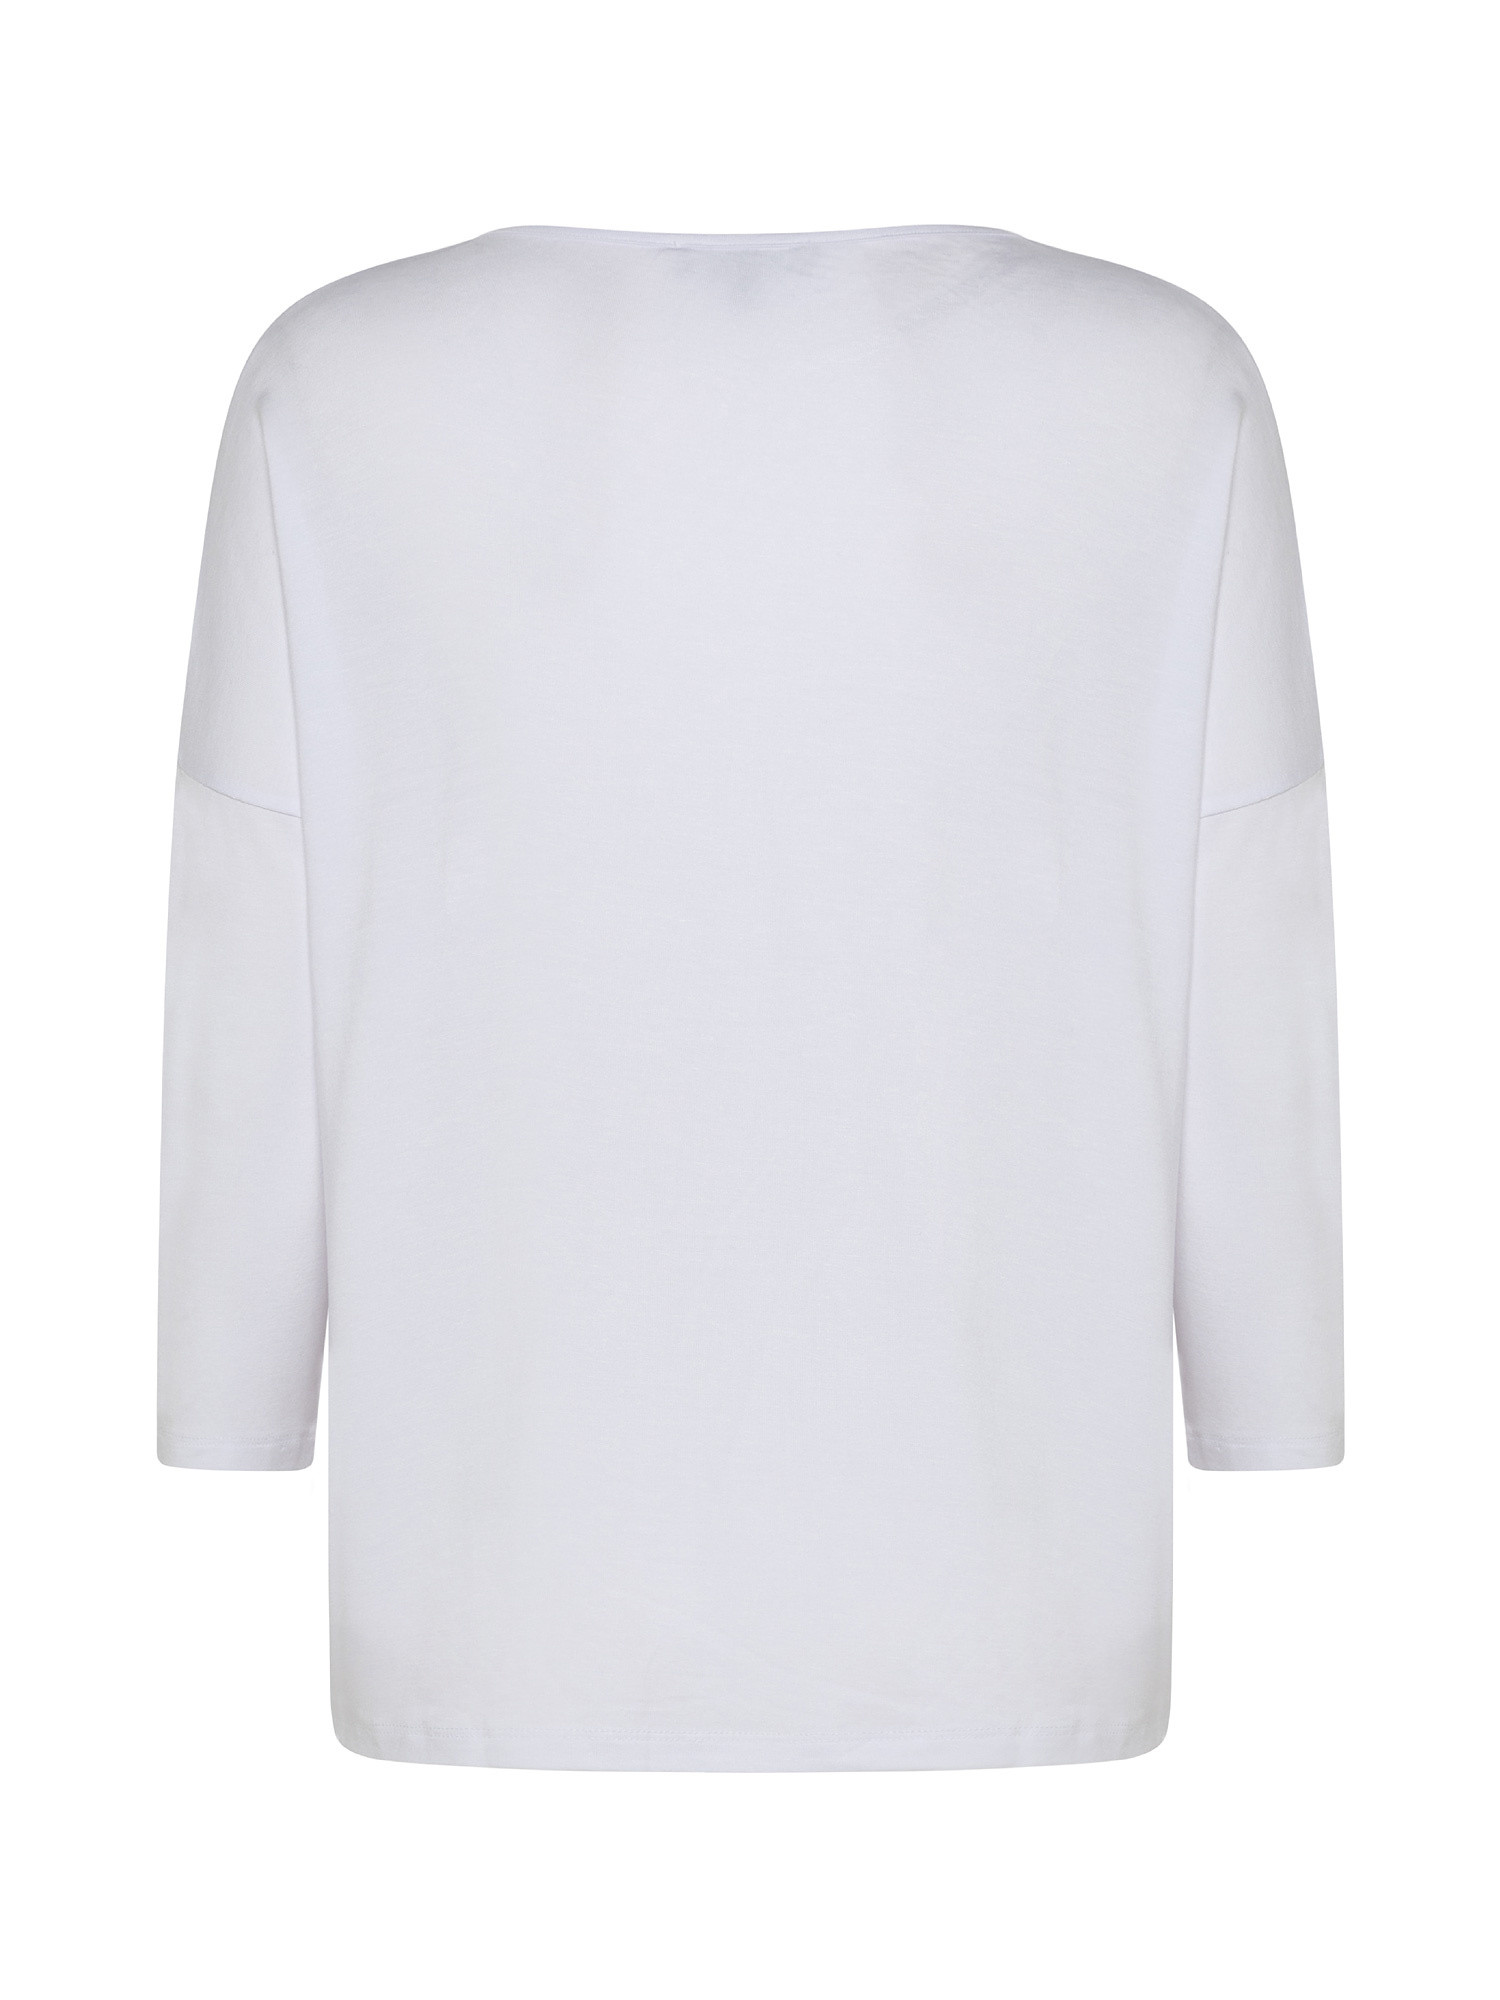 T-shirt over, Bianco, large